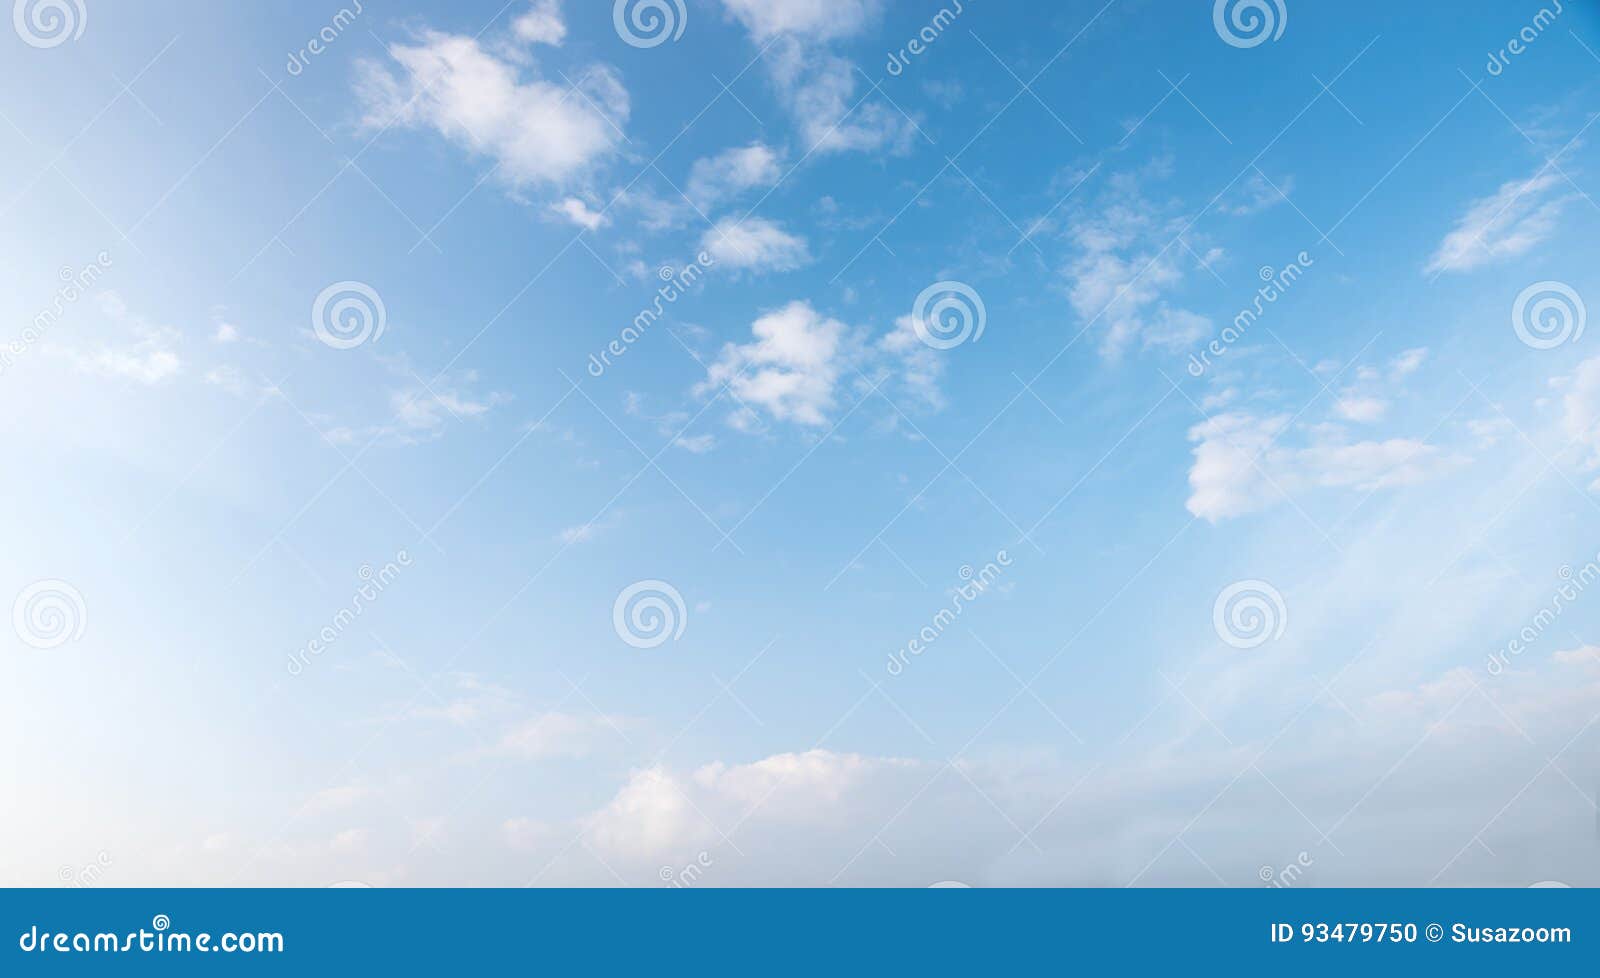 light blue sky with tiny fluffy clouds